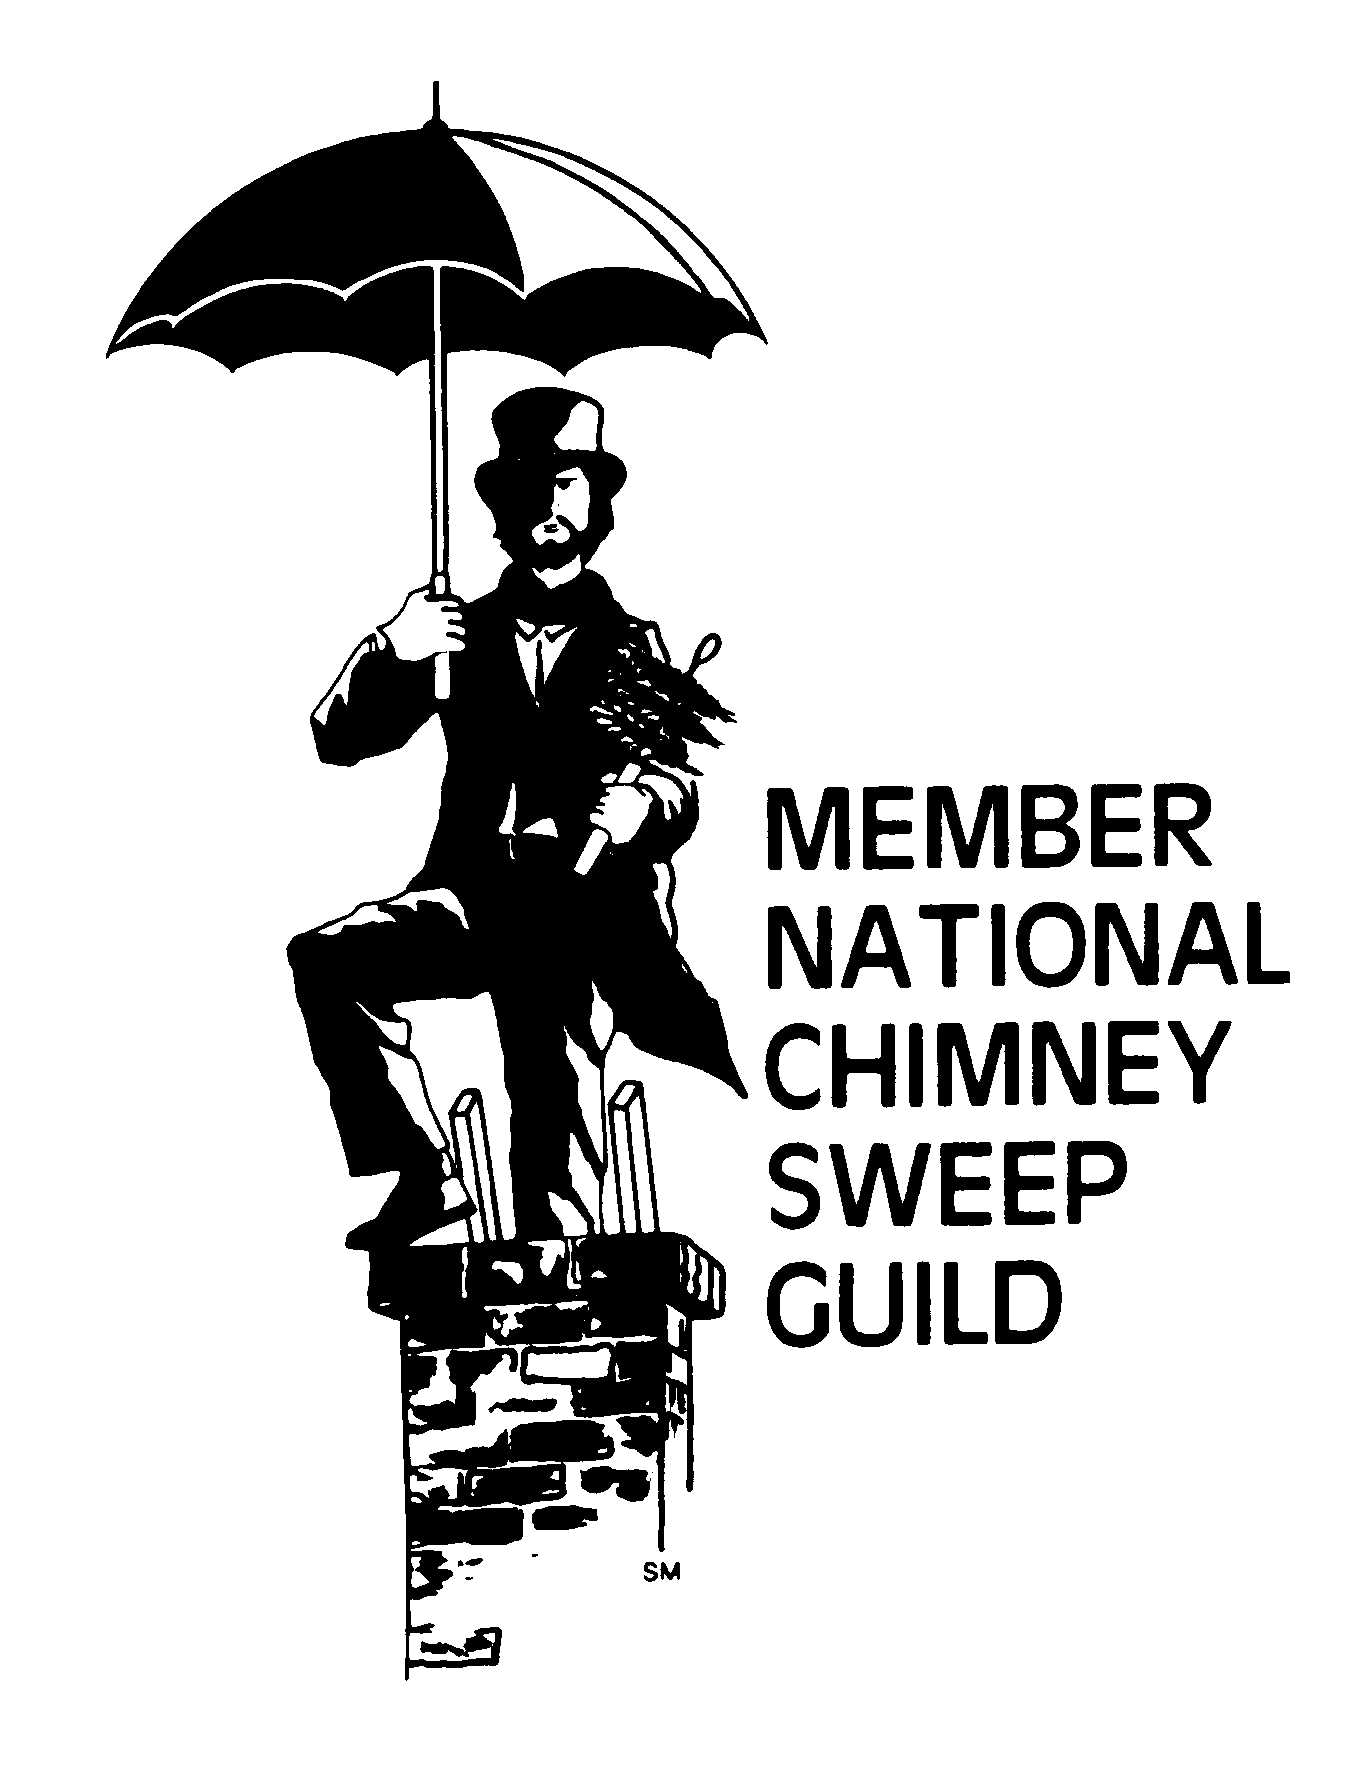 NCSG (National Chimney Sweep Guild)